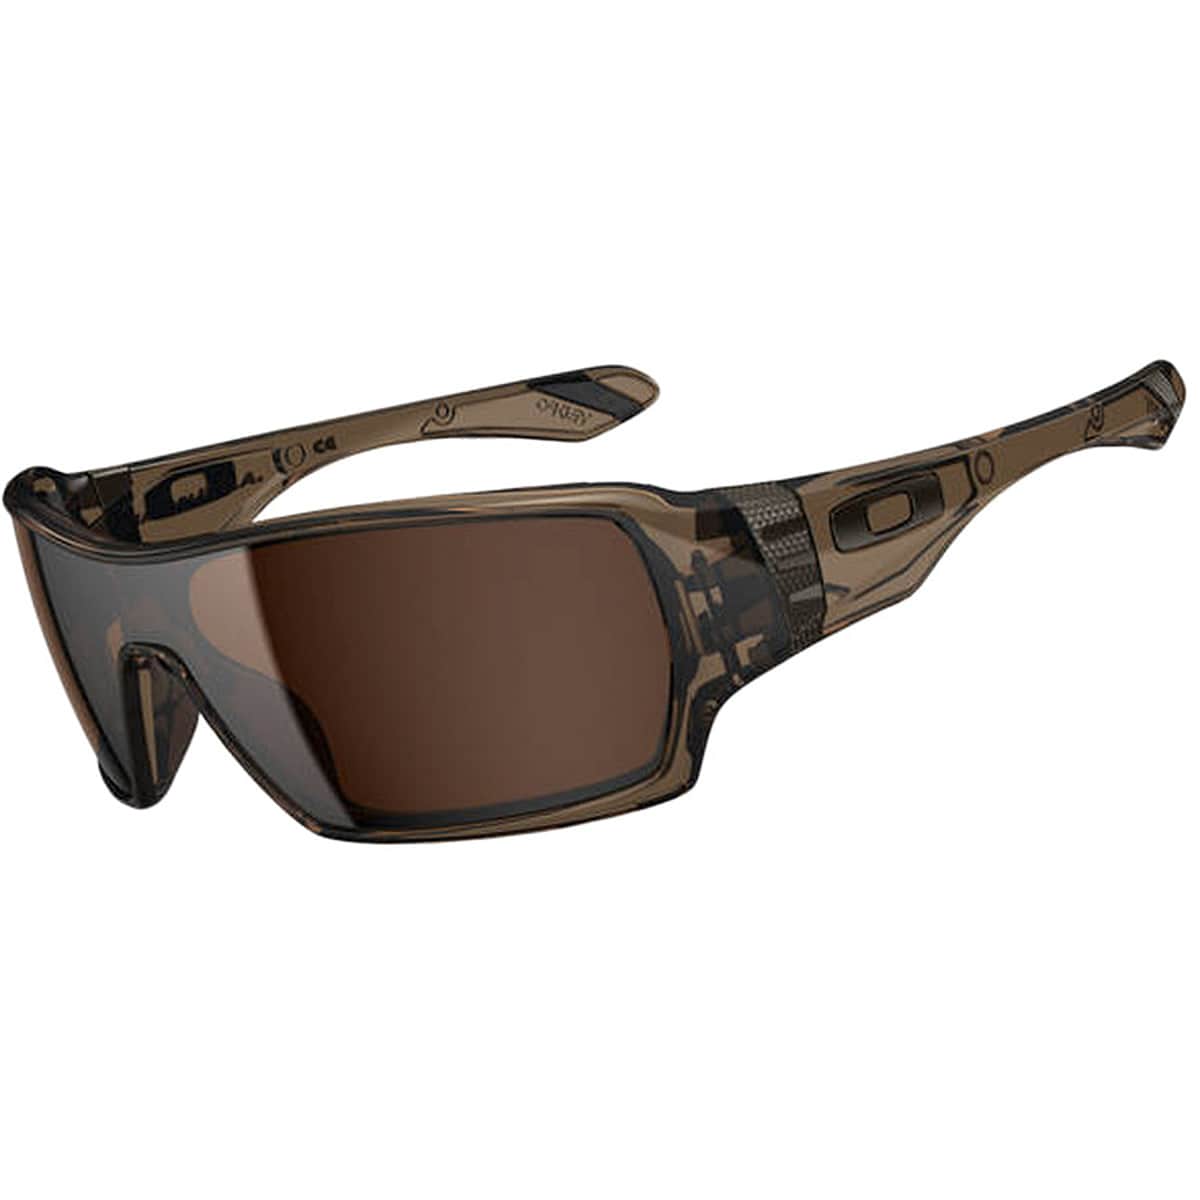 Oakley Offshoot Sunglasses - Men's - Accessories